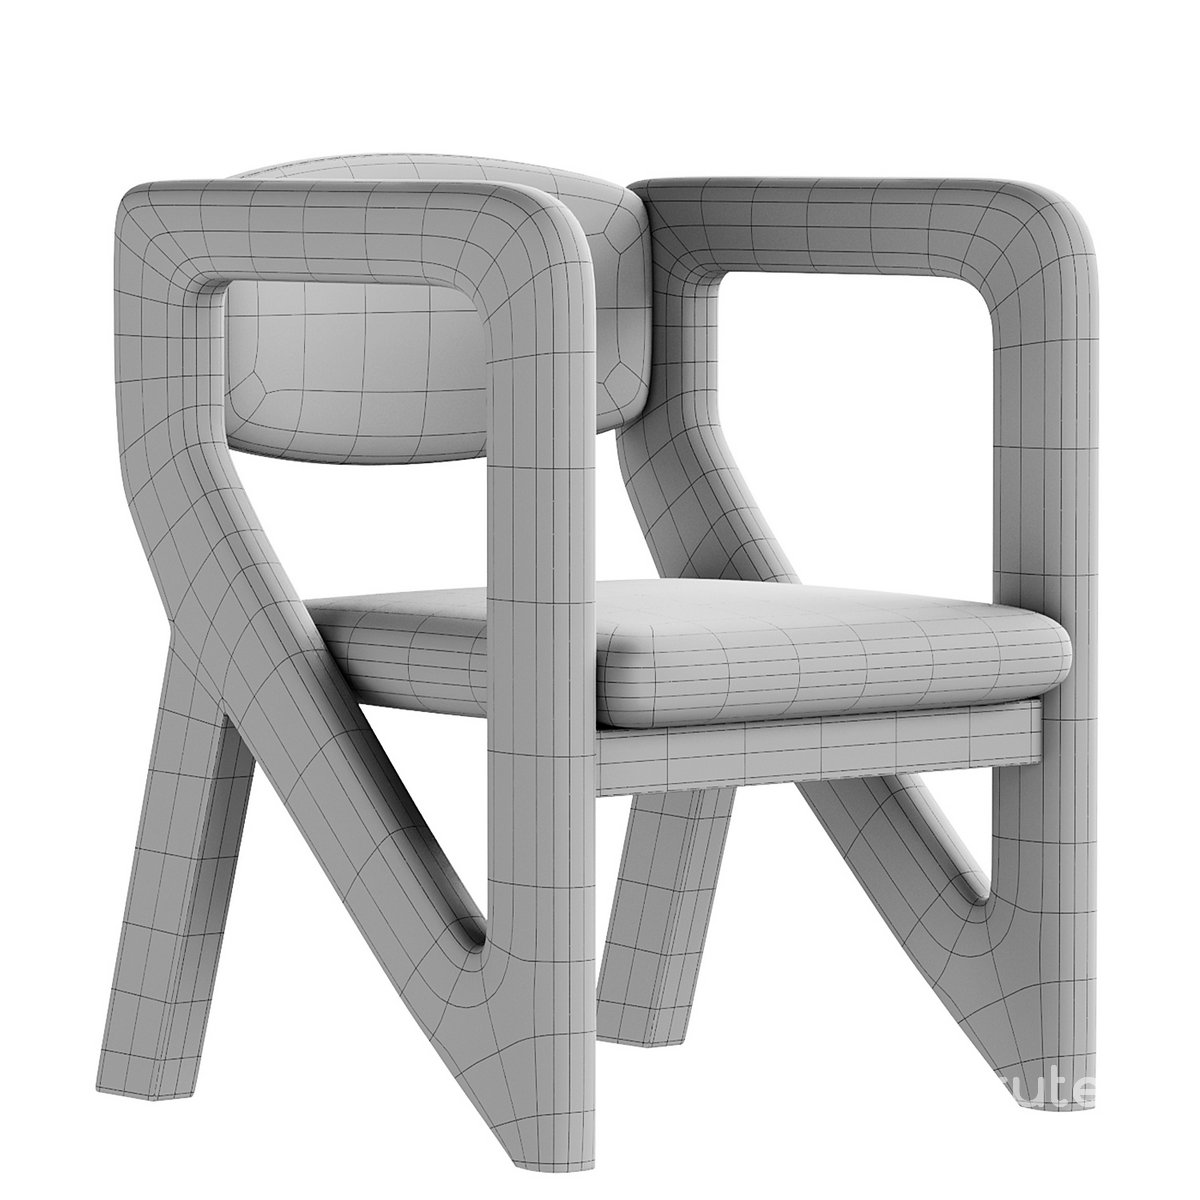 Caderia chair - 3dbrute : 3dmodel furniture and decor